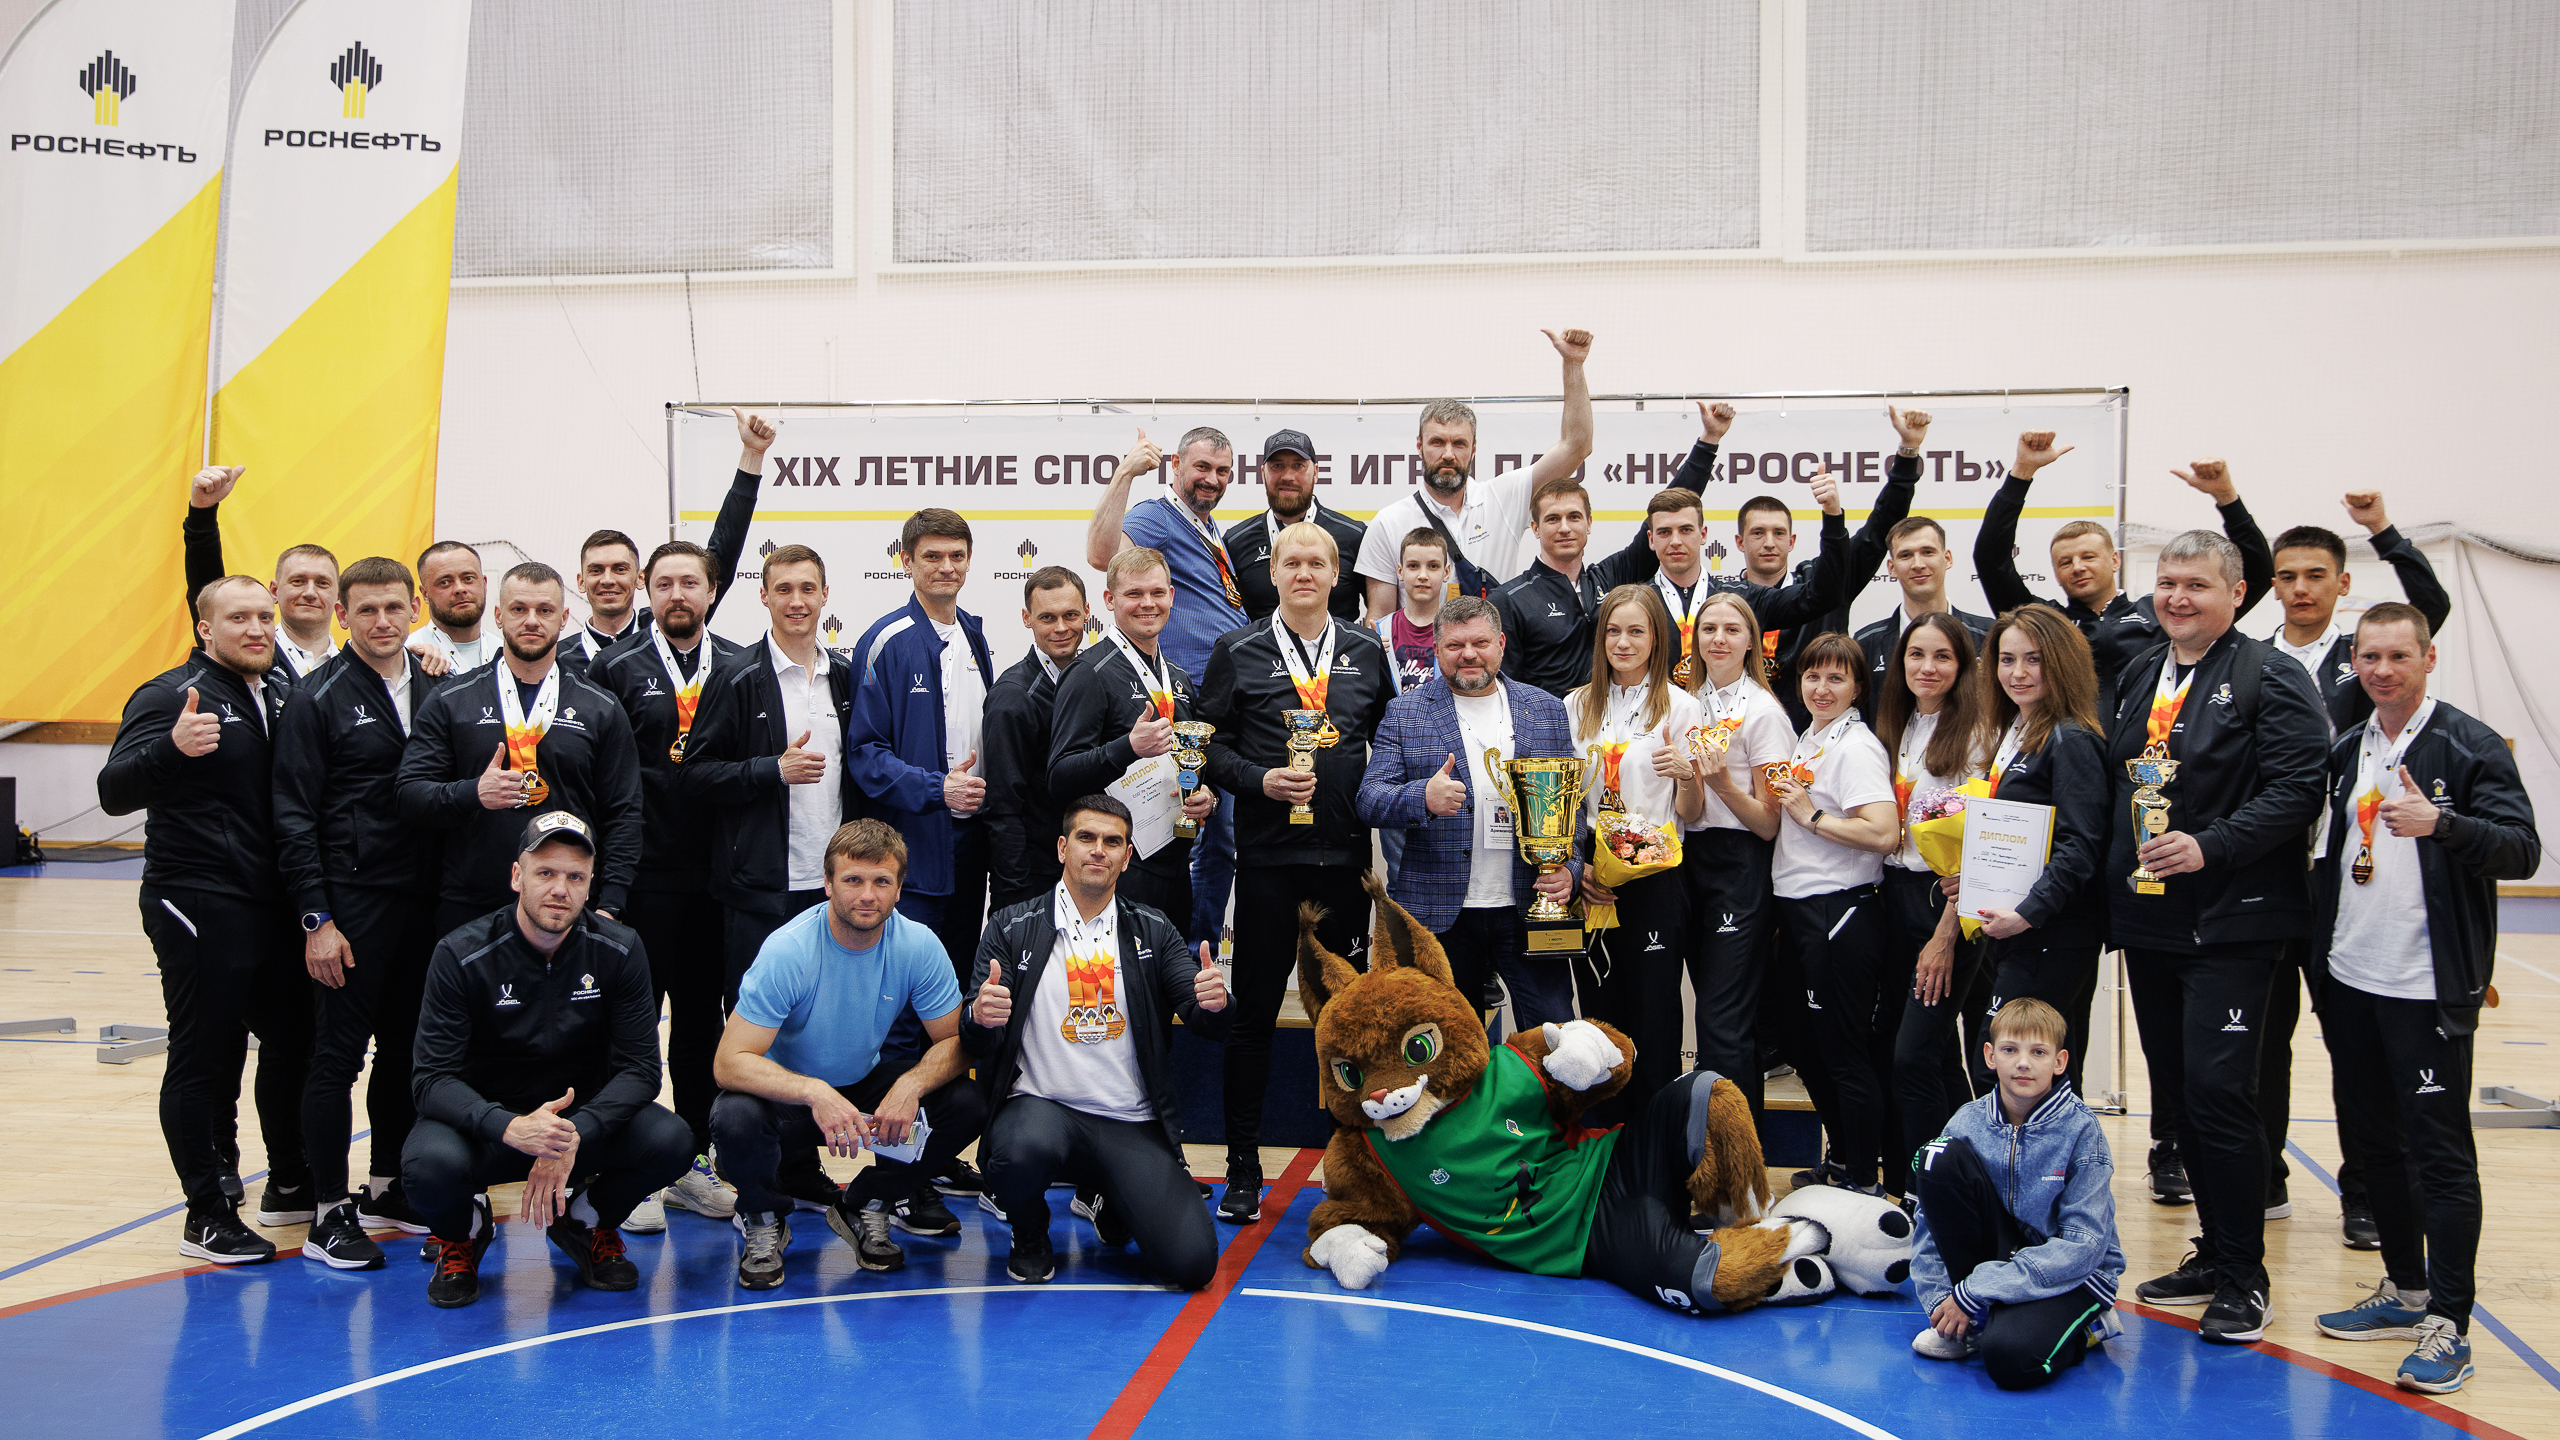 Команда «РН-Уватнефтегаза» стала победителем XIX Летних спортивных игр